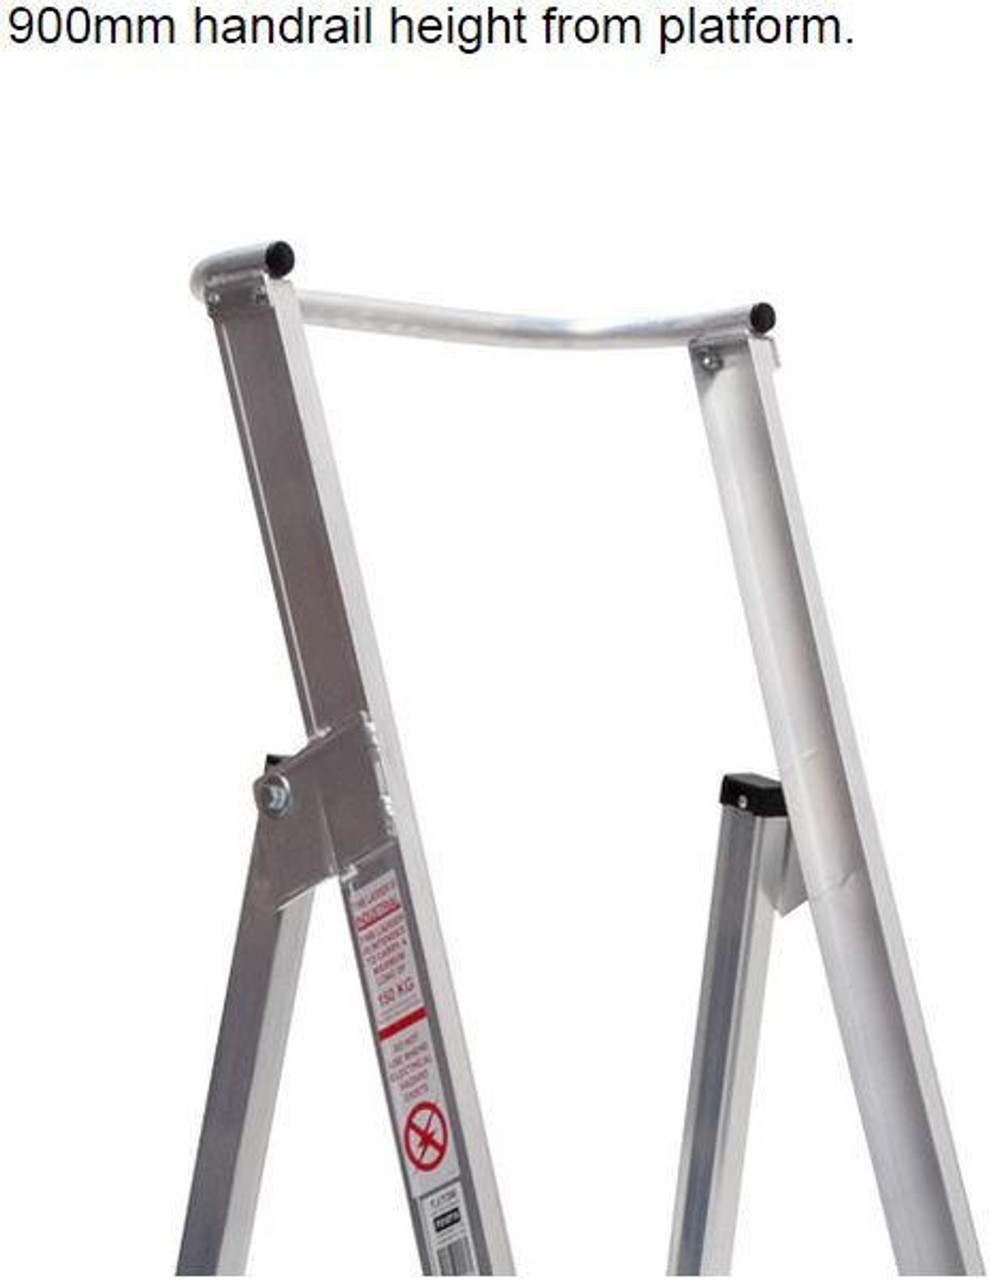 Bailey Platform Ladder Aluminium 150kg Platform Height 0.9m Heavy Duty Welded FS10714